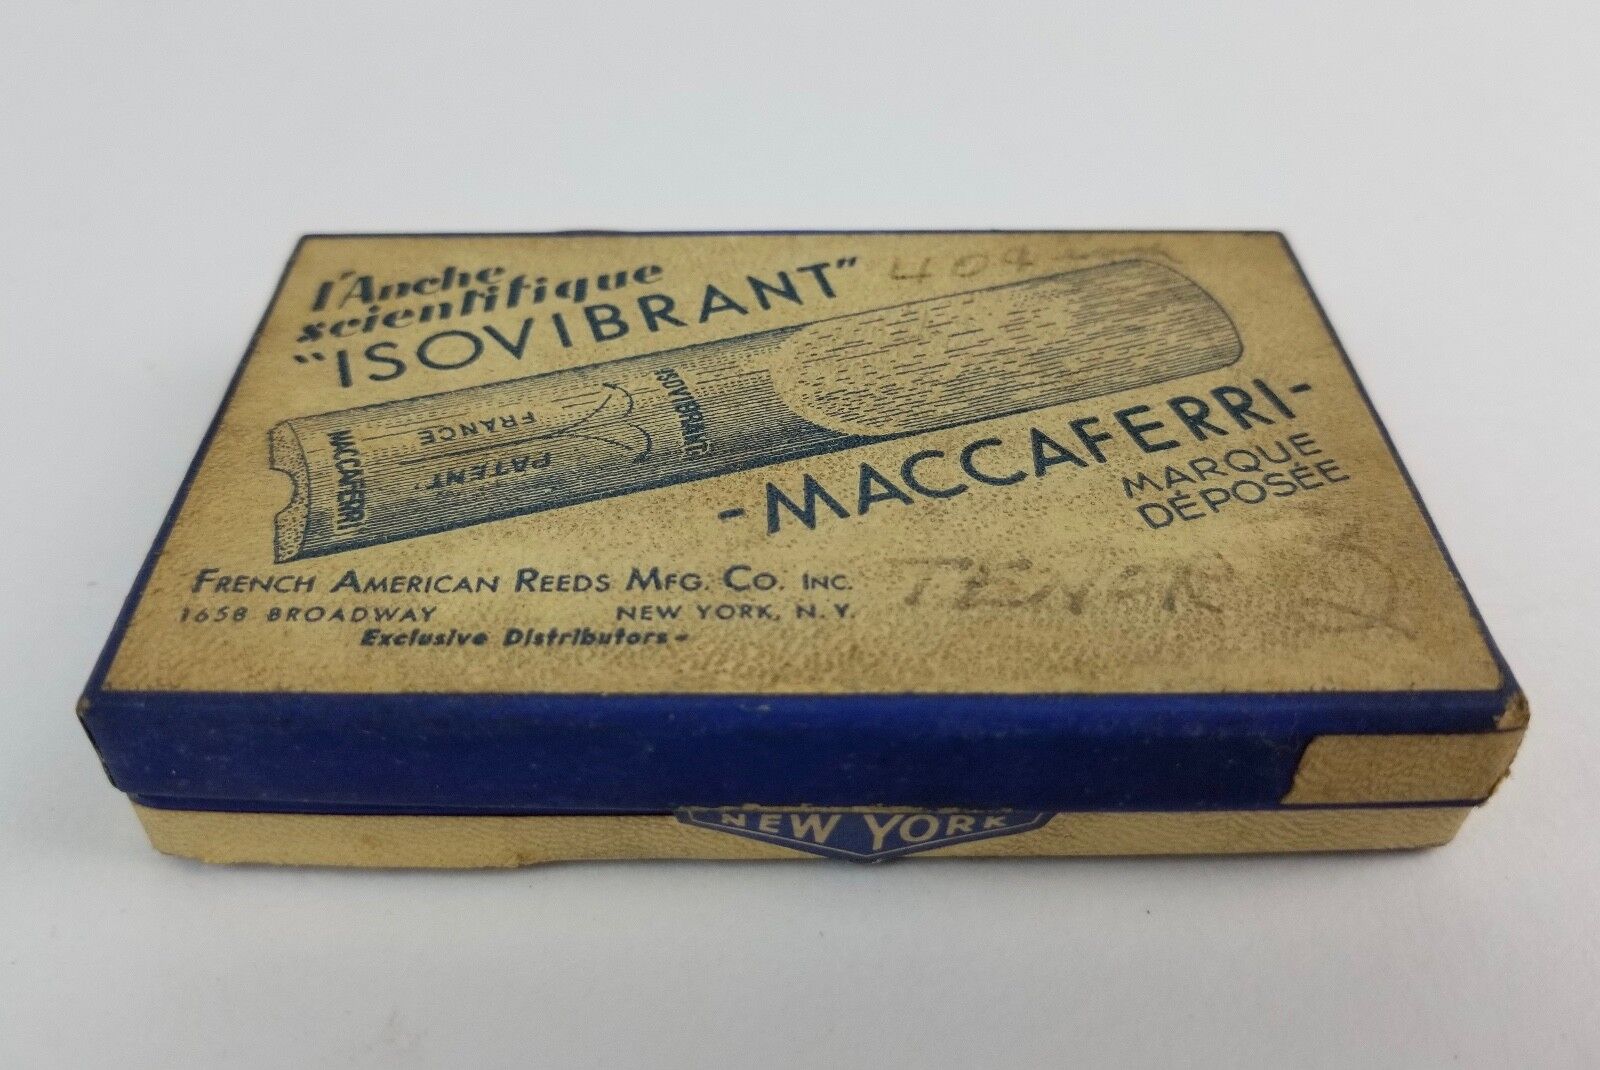 Vintage Isovibrant Maccaferri Fench American Reed EMPTY Box Sax Tenor